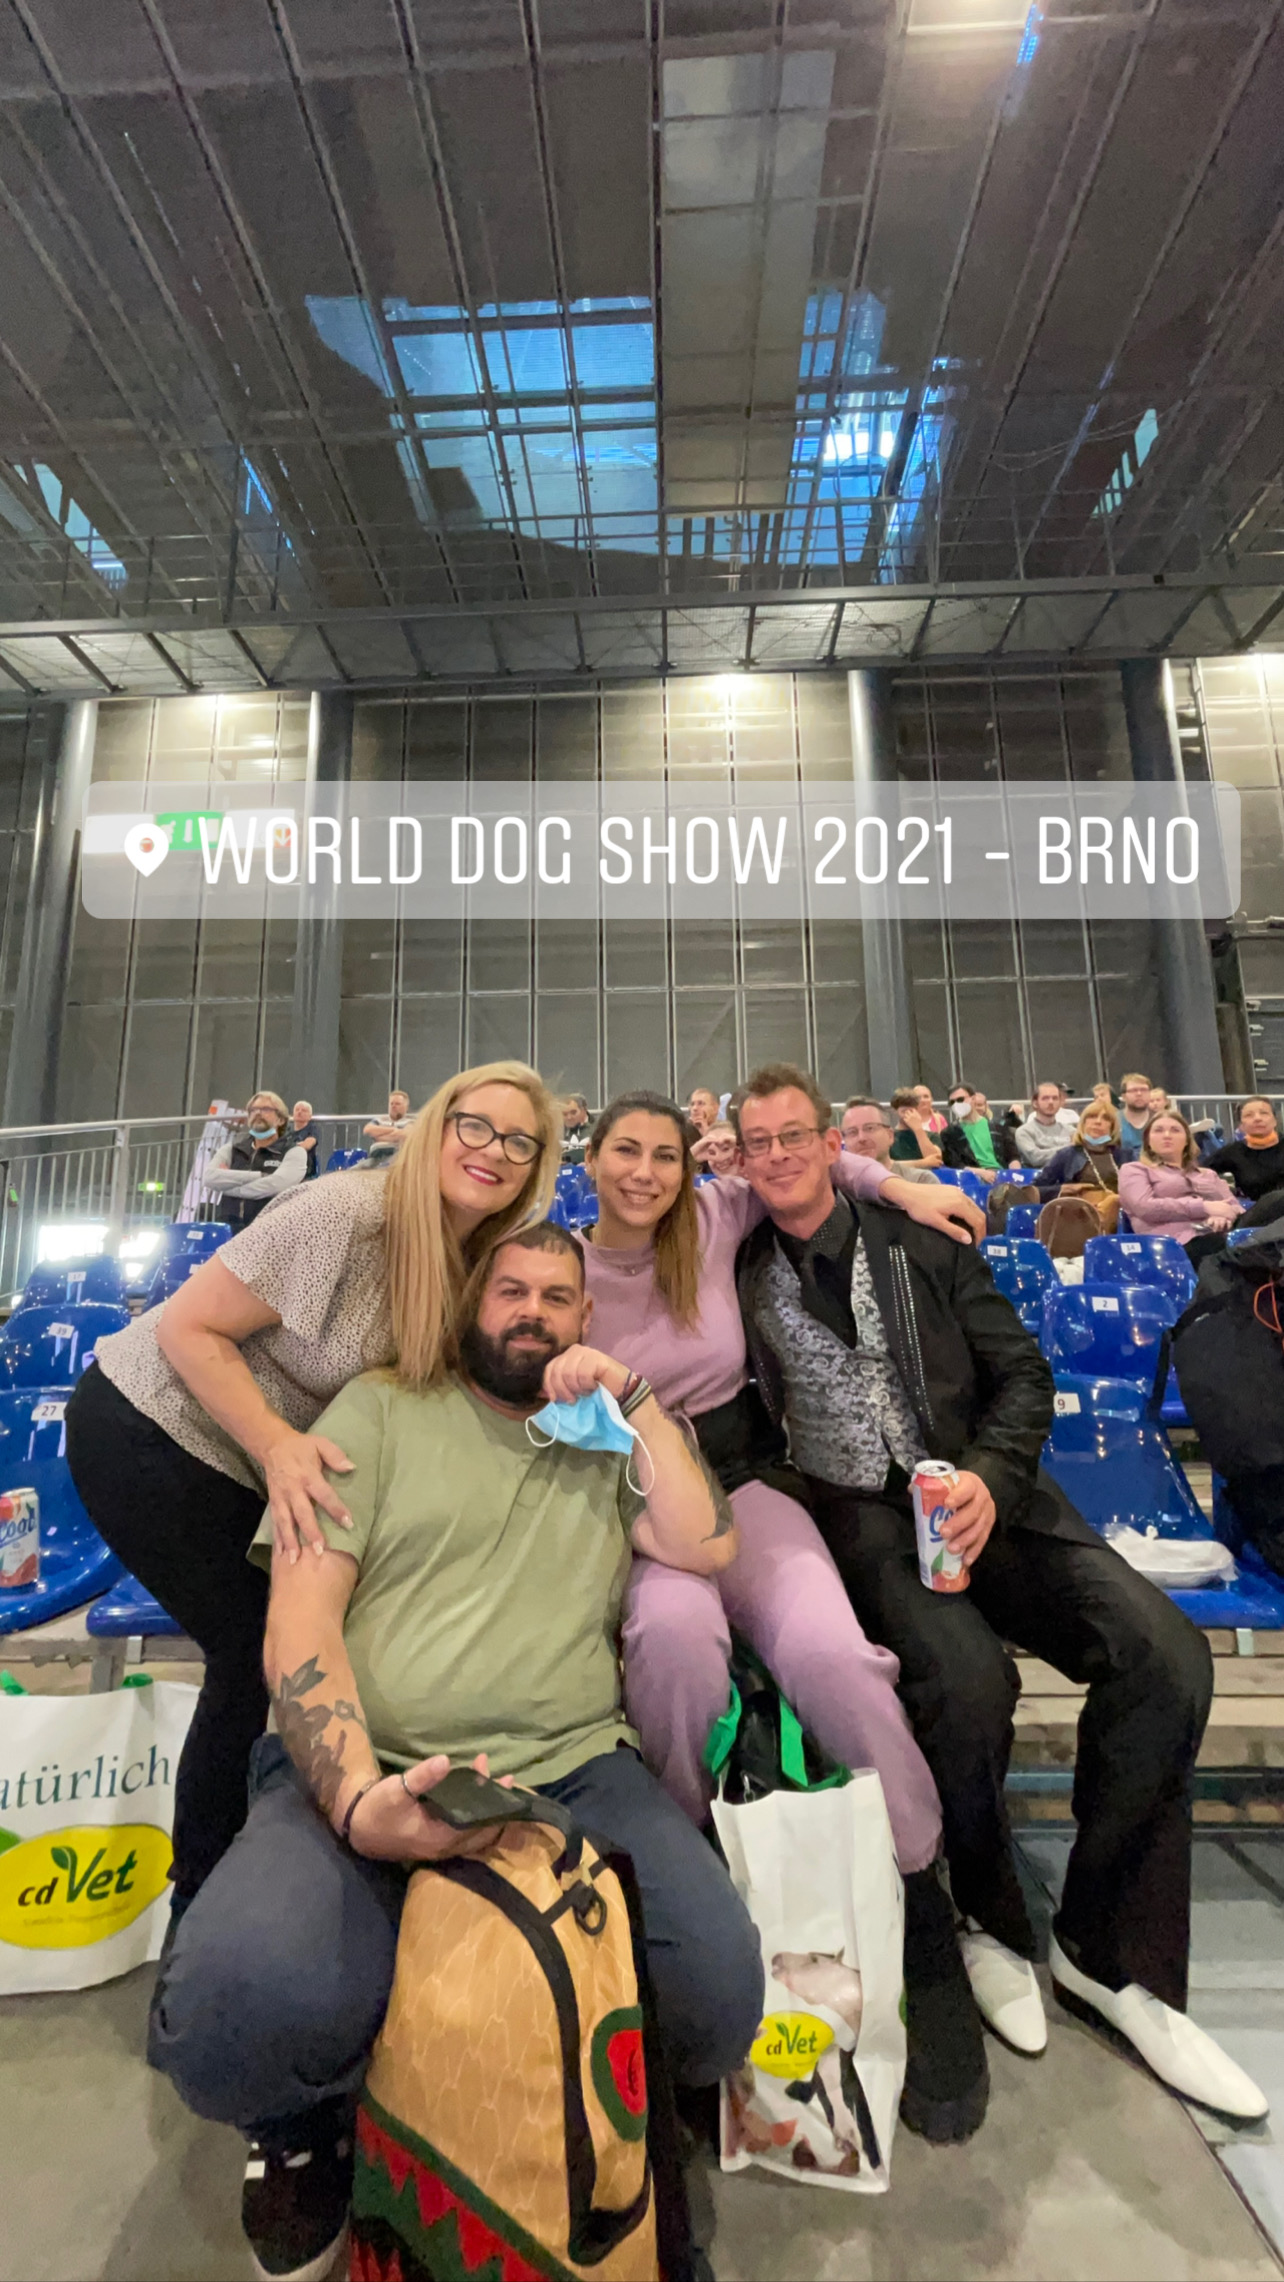 2021 World Dog Show - Brno, Czech Republic